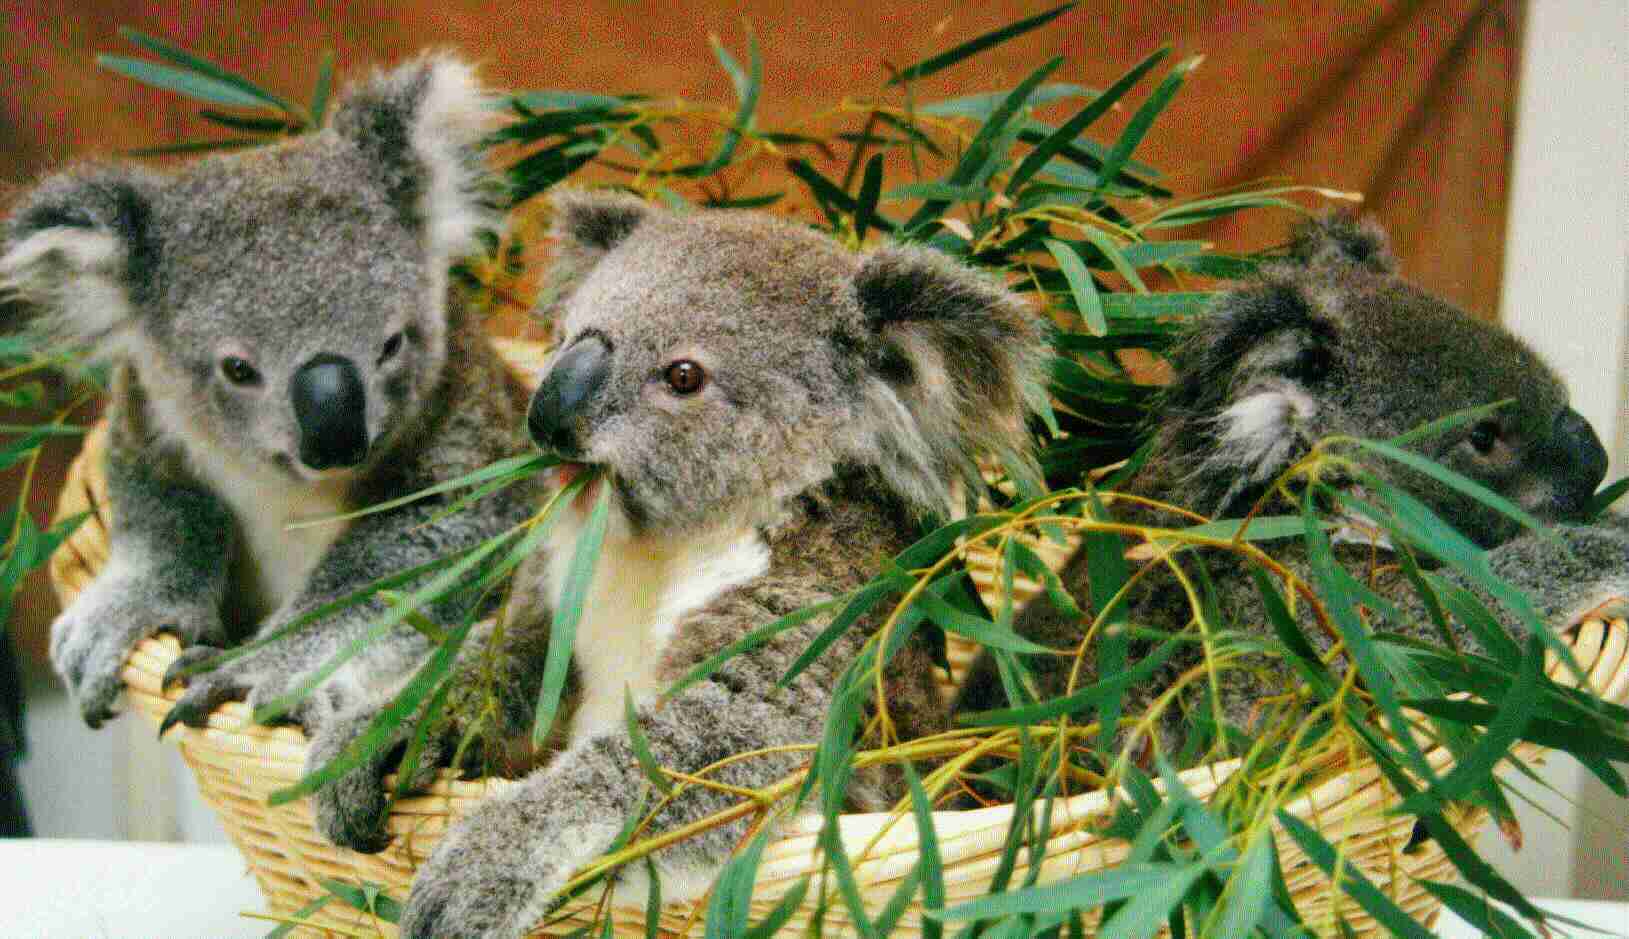 3 little ones in care of the Port Macquarie Koala Hospital / NSW - Australia